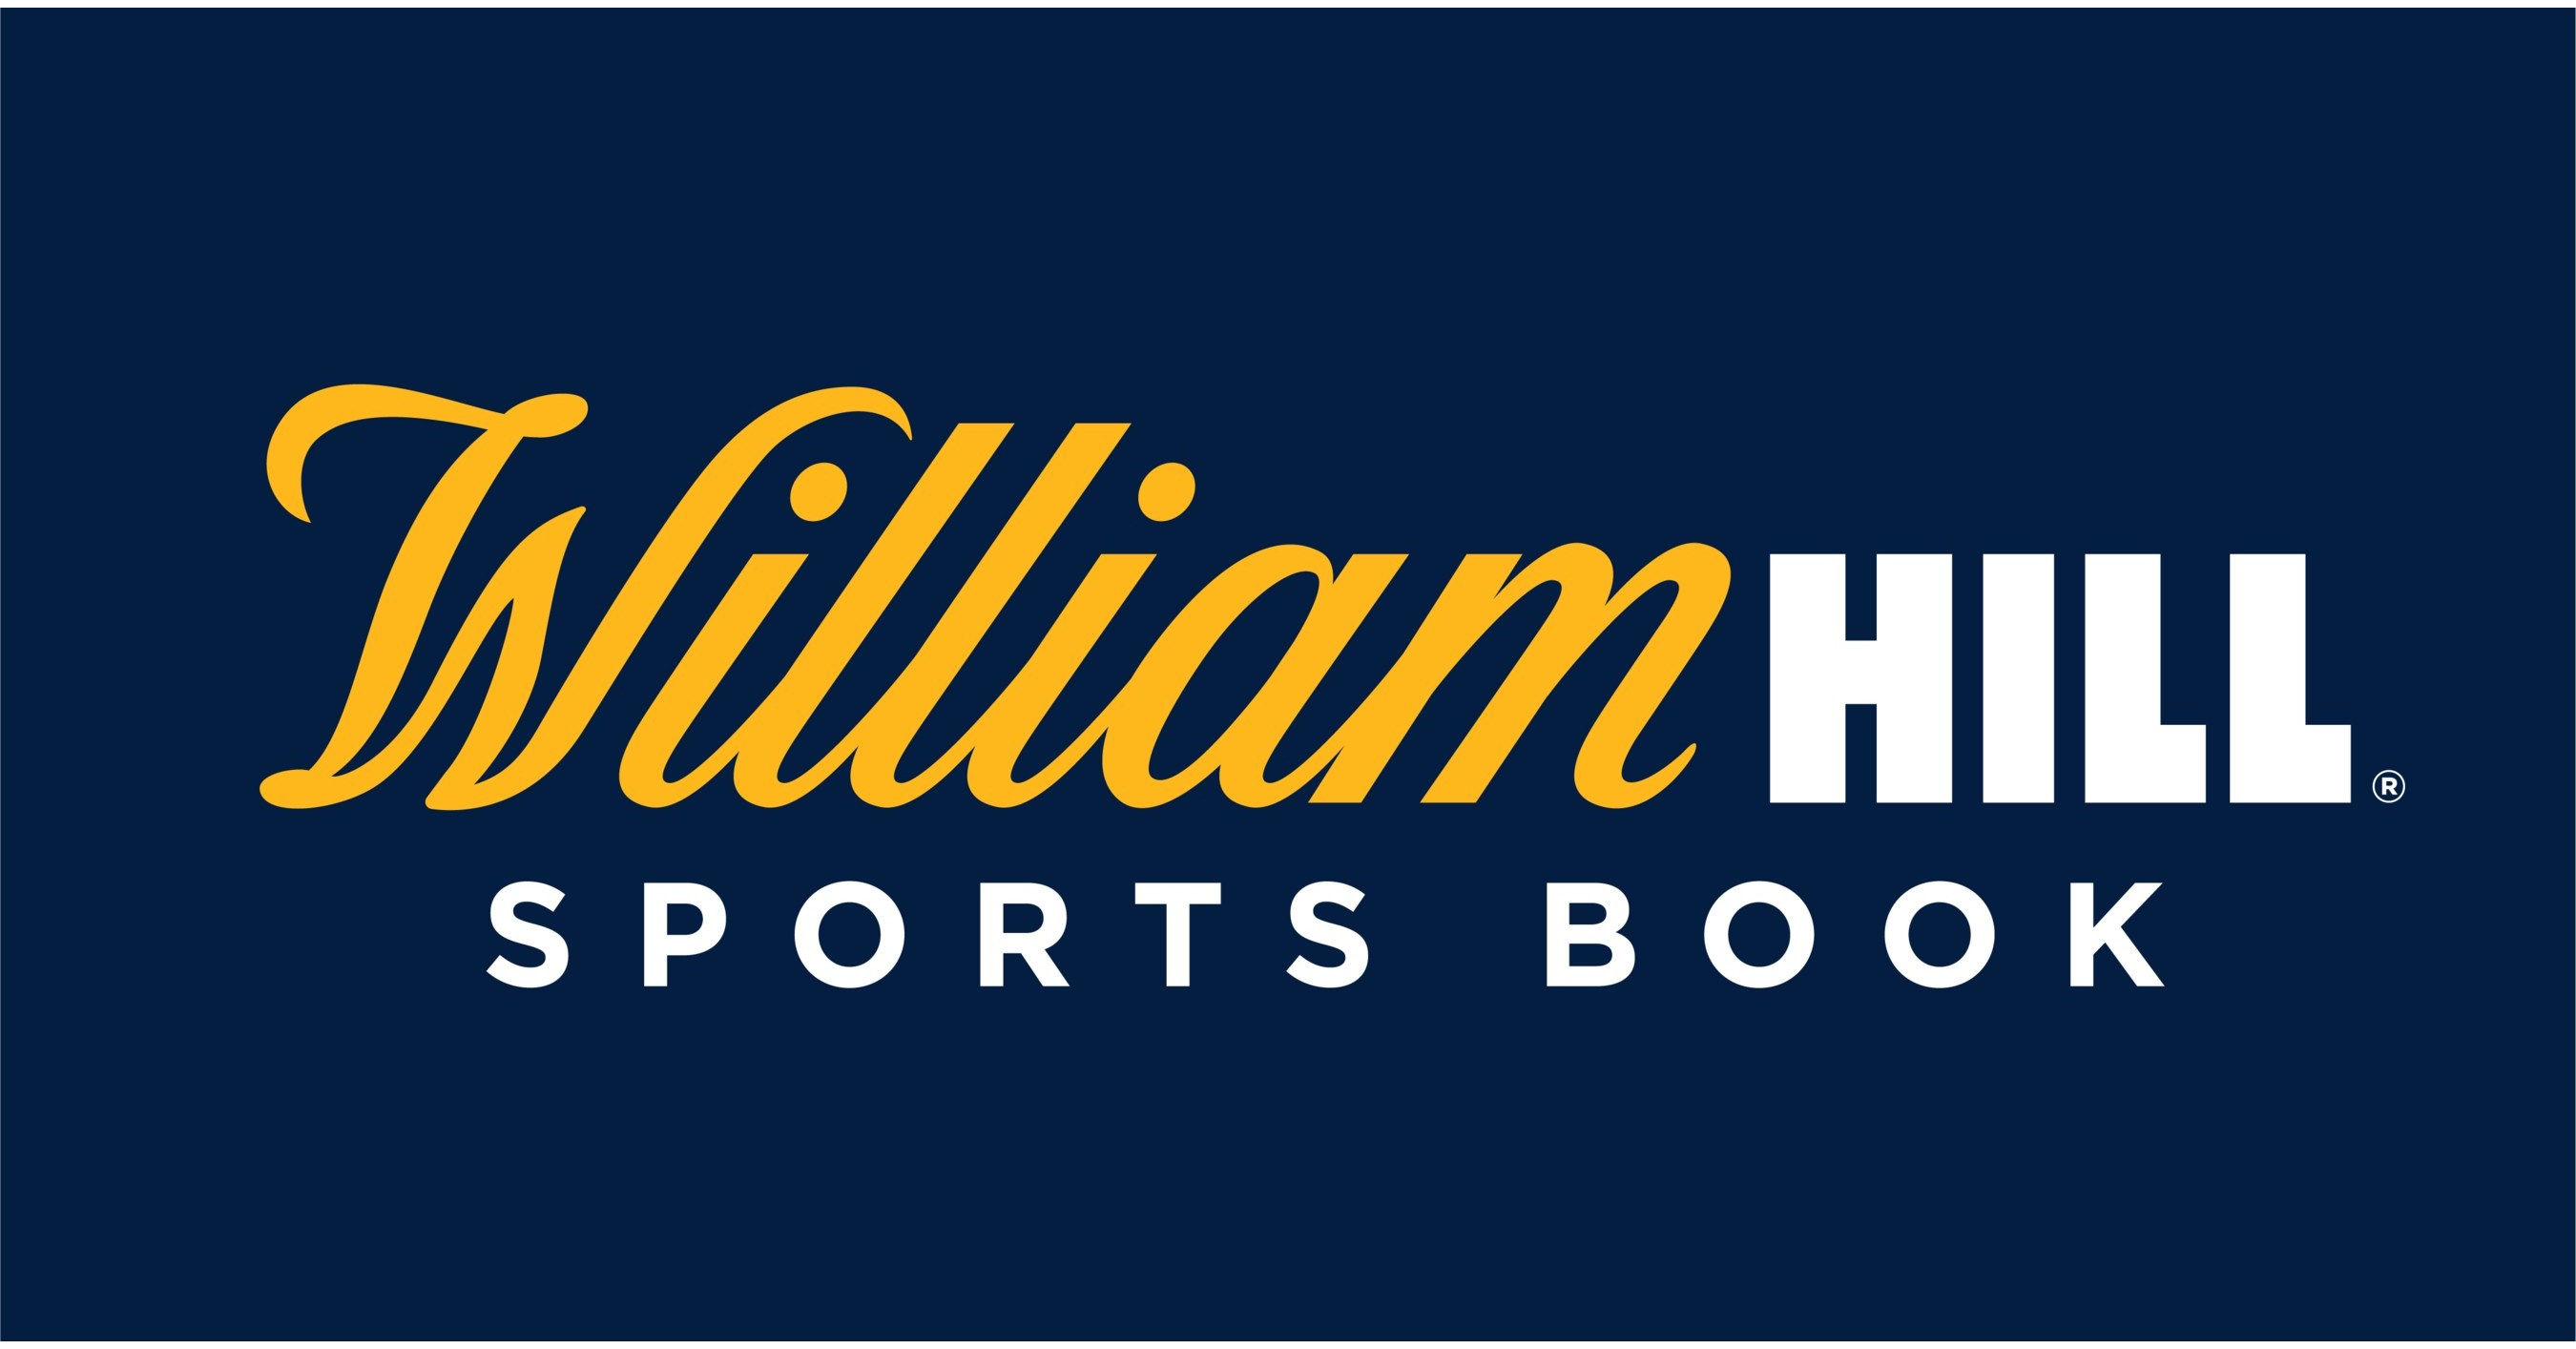 Hill sports book crypto plus doo